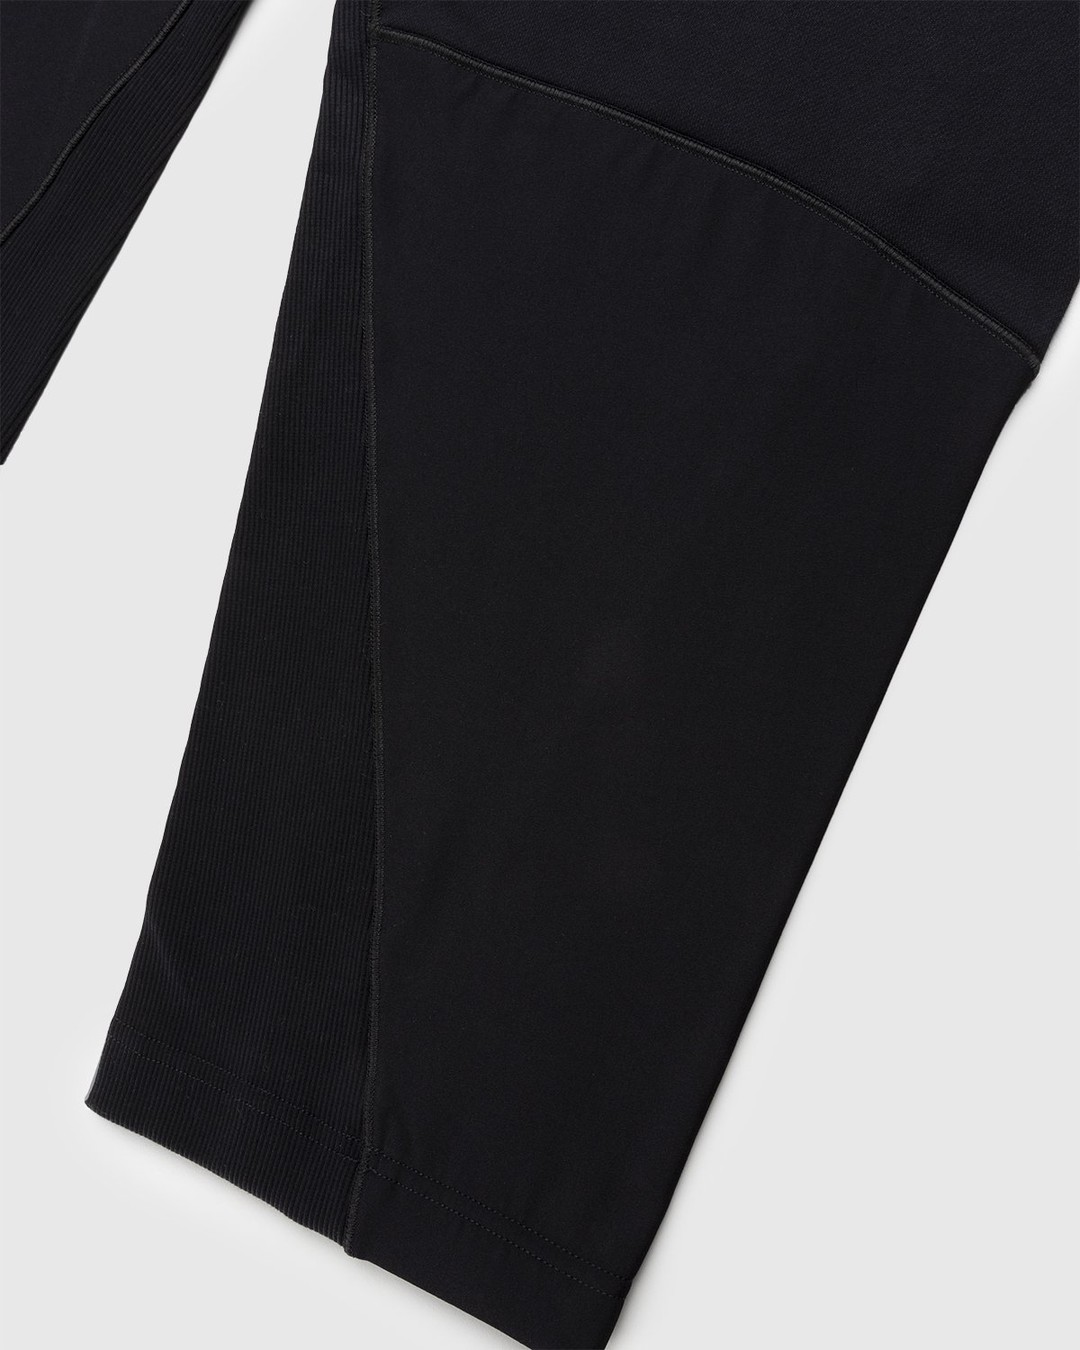 A-Cold-Wall* – Granular Sweatpants Black - Pants - Black - Image 4